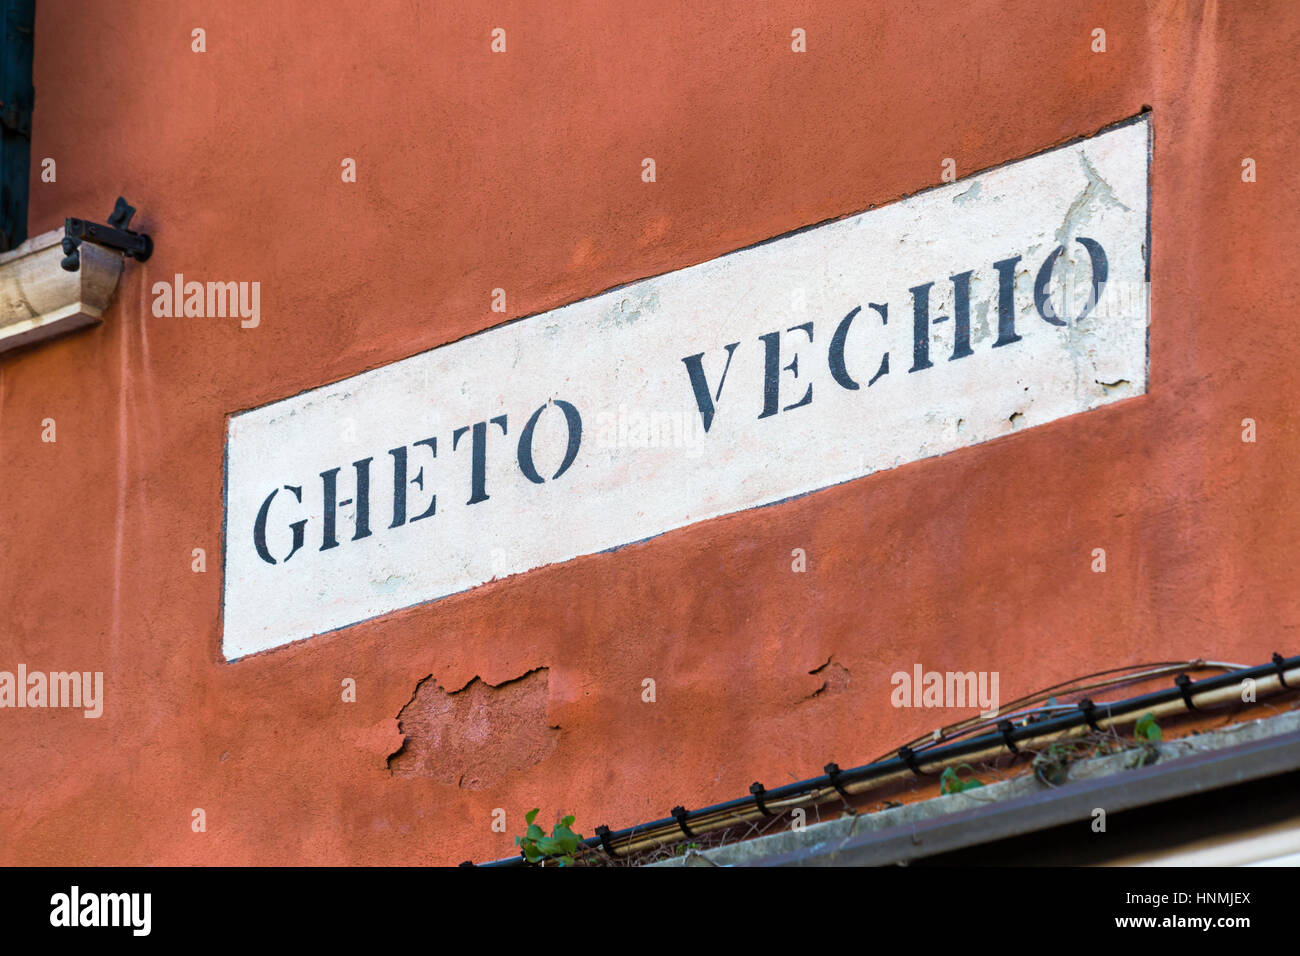 GhEtO Vechio Schild an Wand an das jüdische Ghetto Region Cannaregio in Venedig im Januar Stockfoto